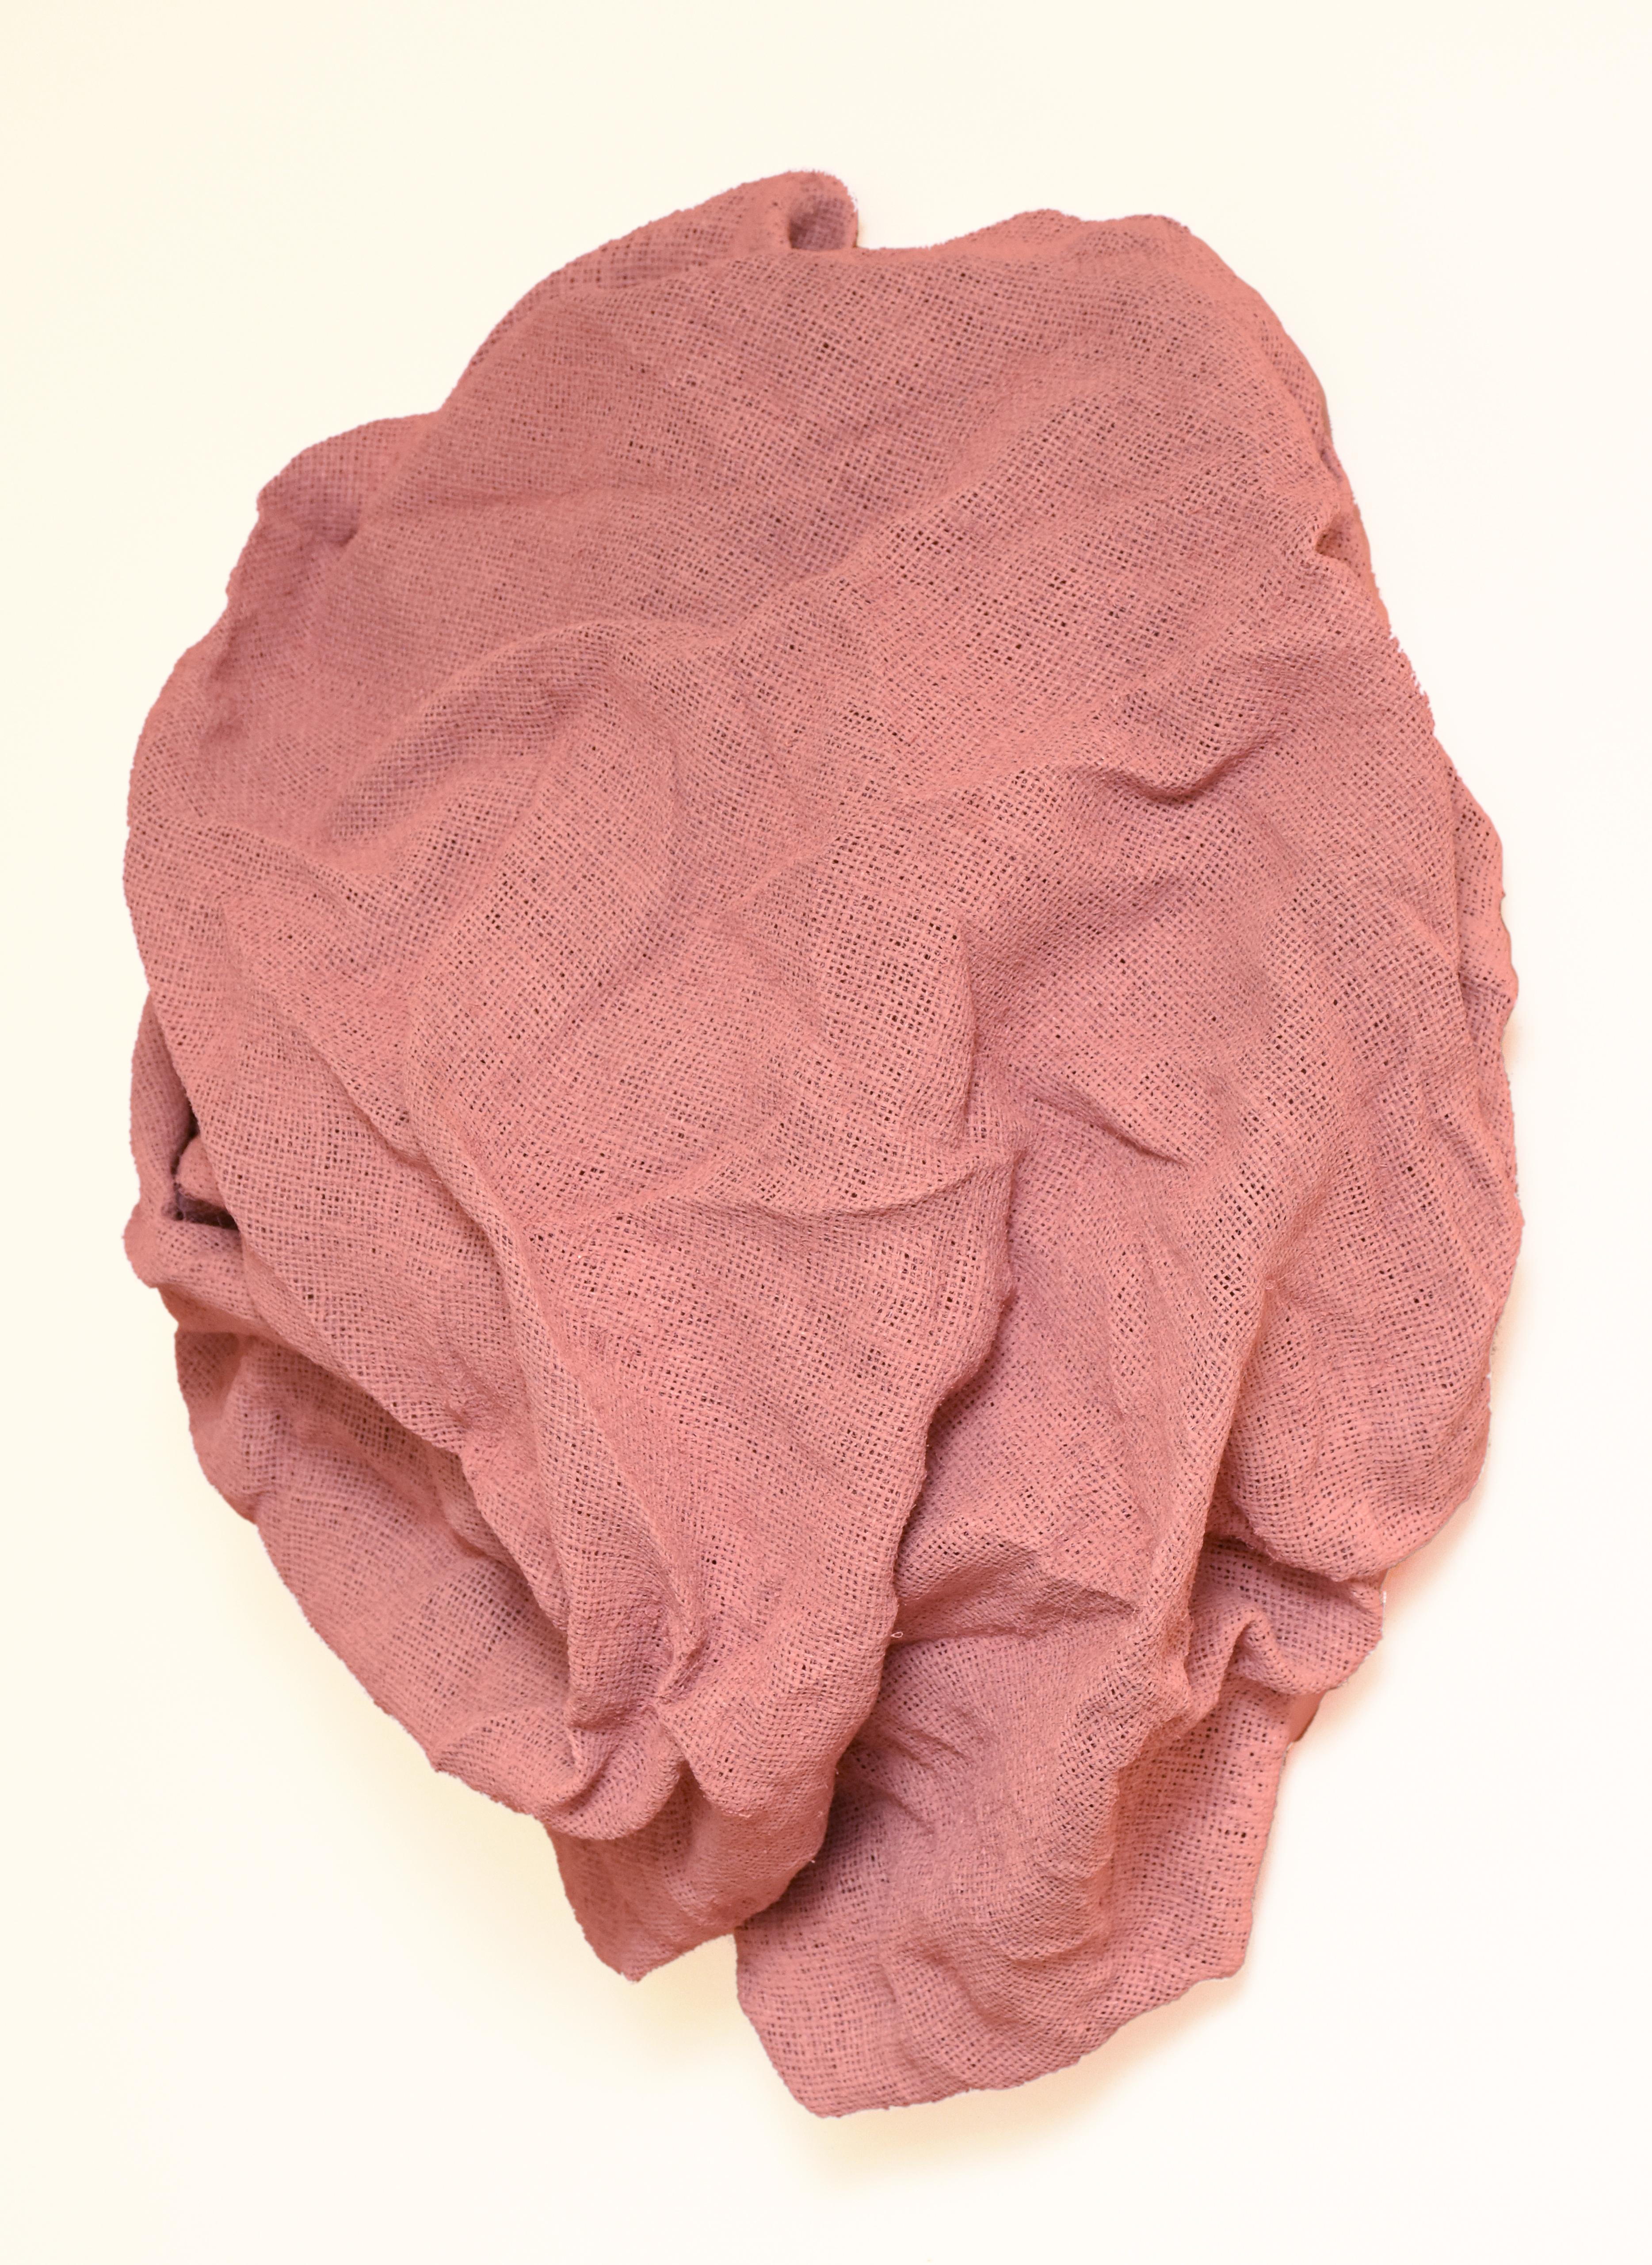 Ballet Pink Folds (hard fabric, textile wall sculpture, contemporary art design) - Abstract Mixed Media Art by Chloe Hedden